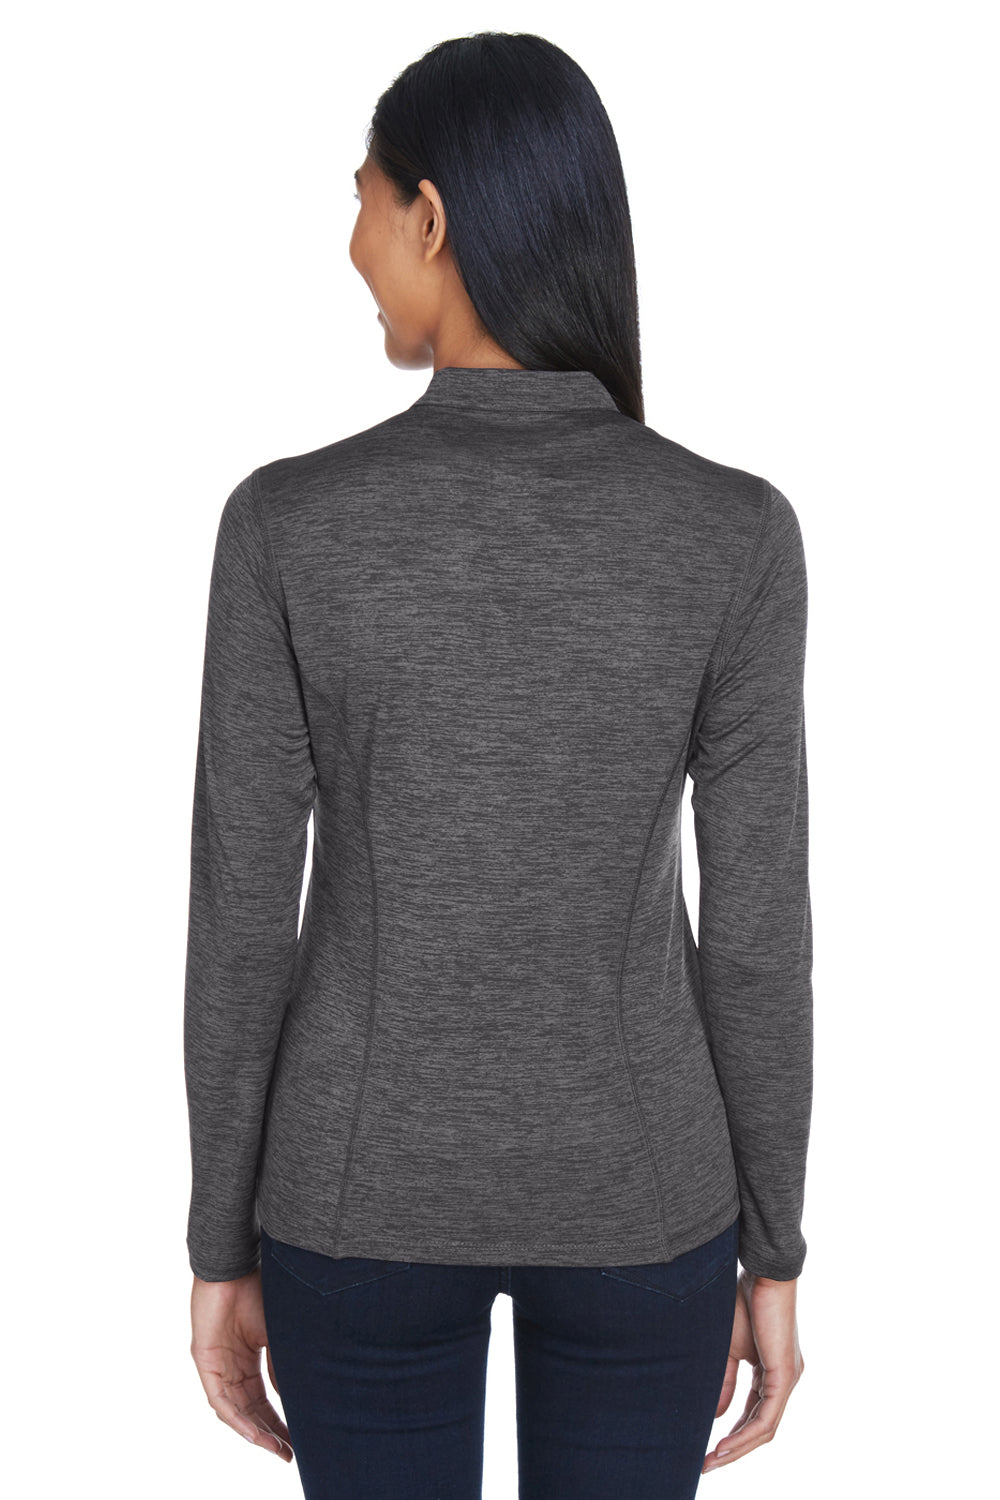 Core 365 CE401W Womens Kinetic Performance Moisture Wicking 1/4 Zip Sweatshirt Carbon Grey/Black Back